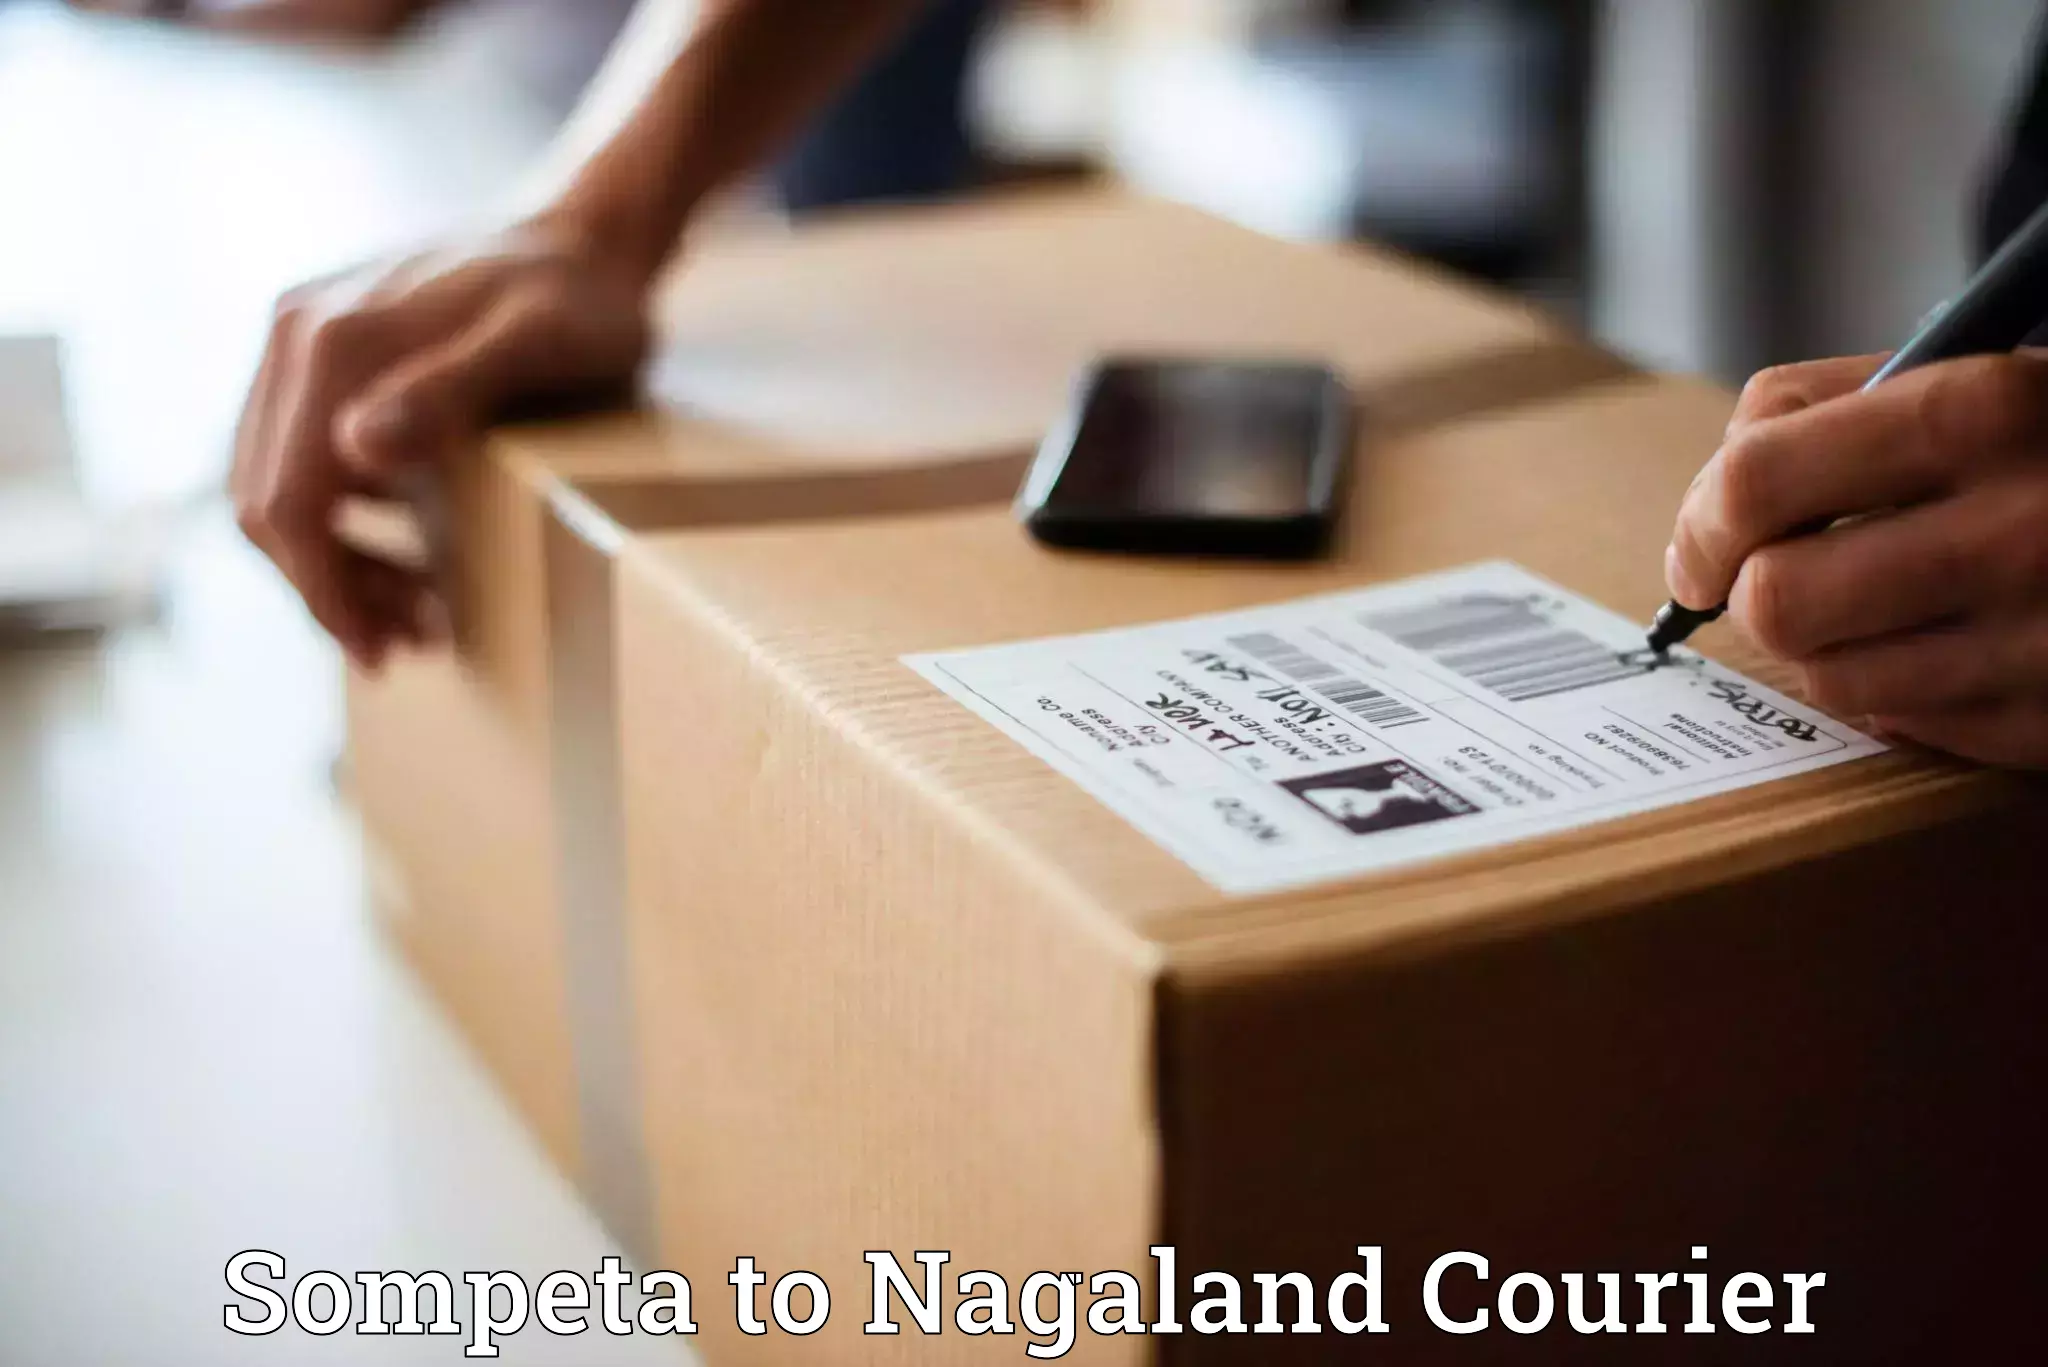 International courier networks Sompeta to Nagaland